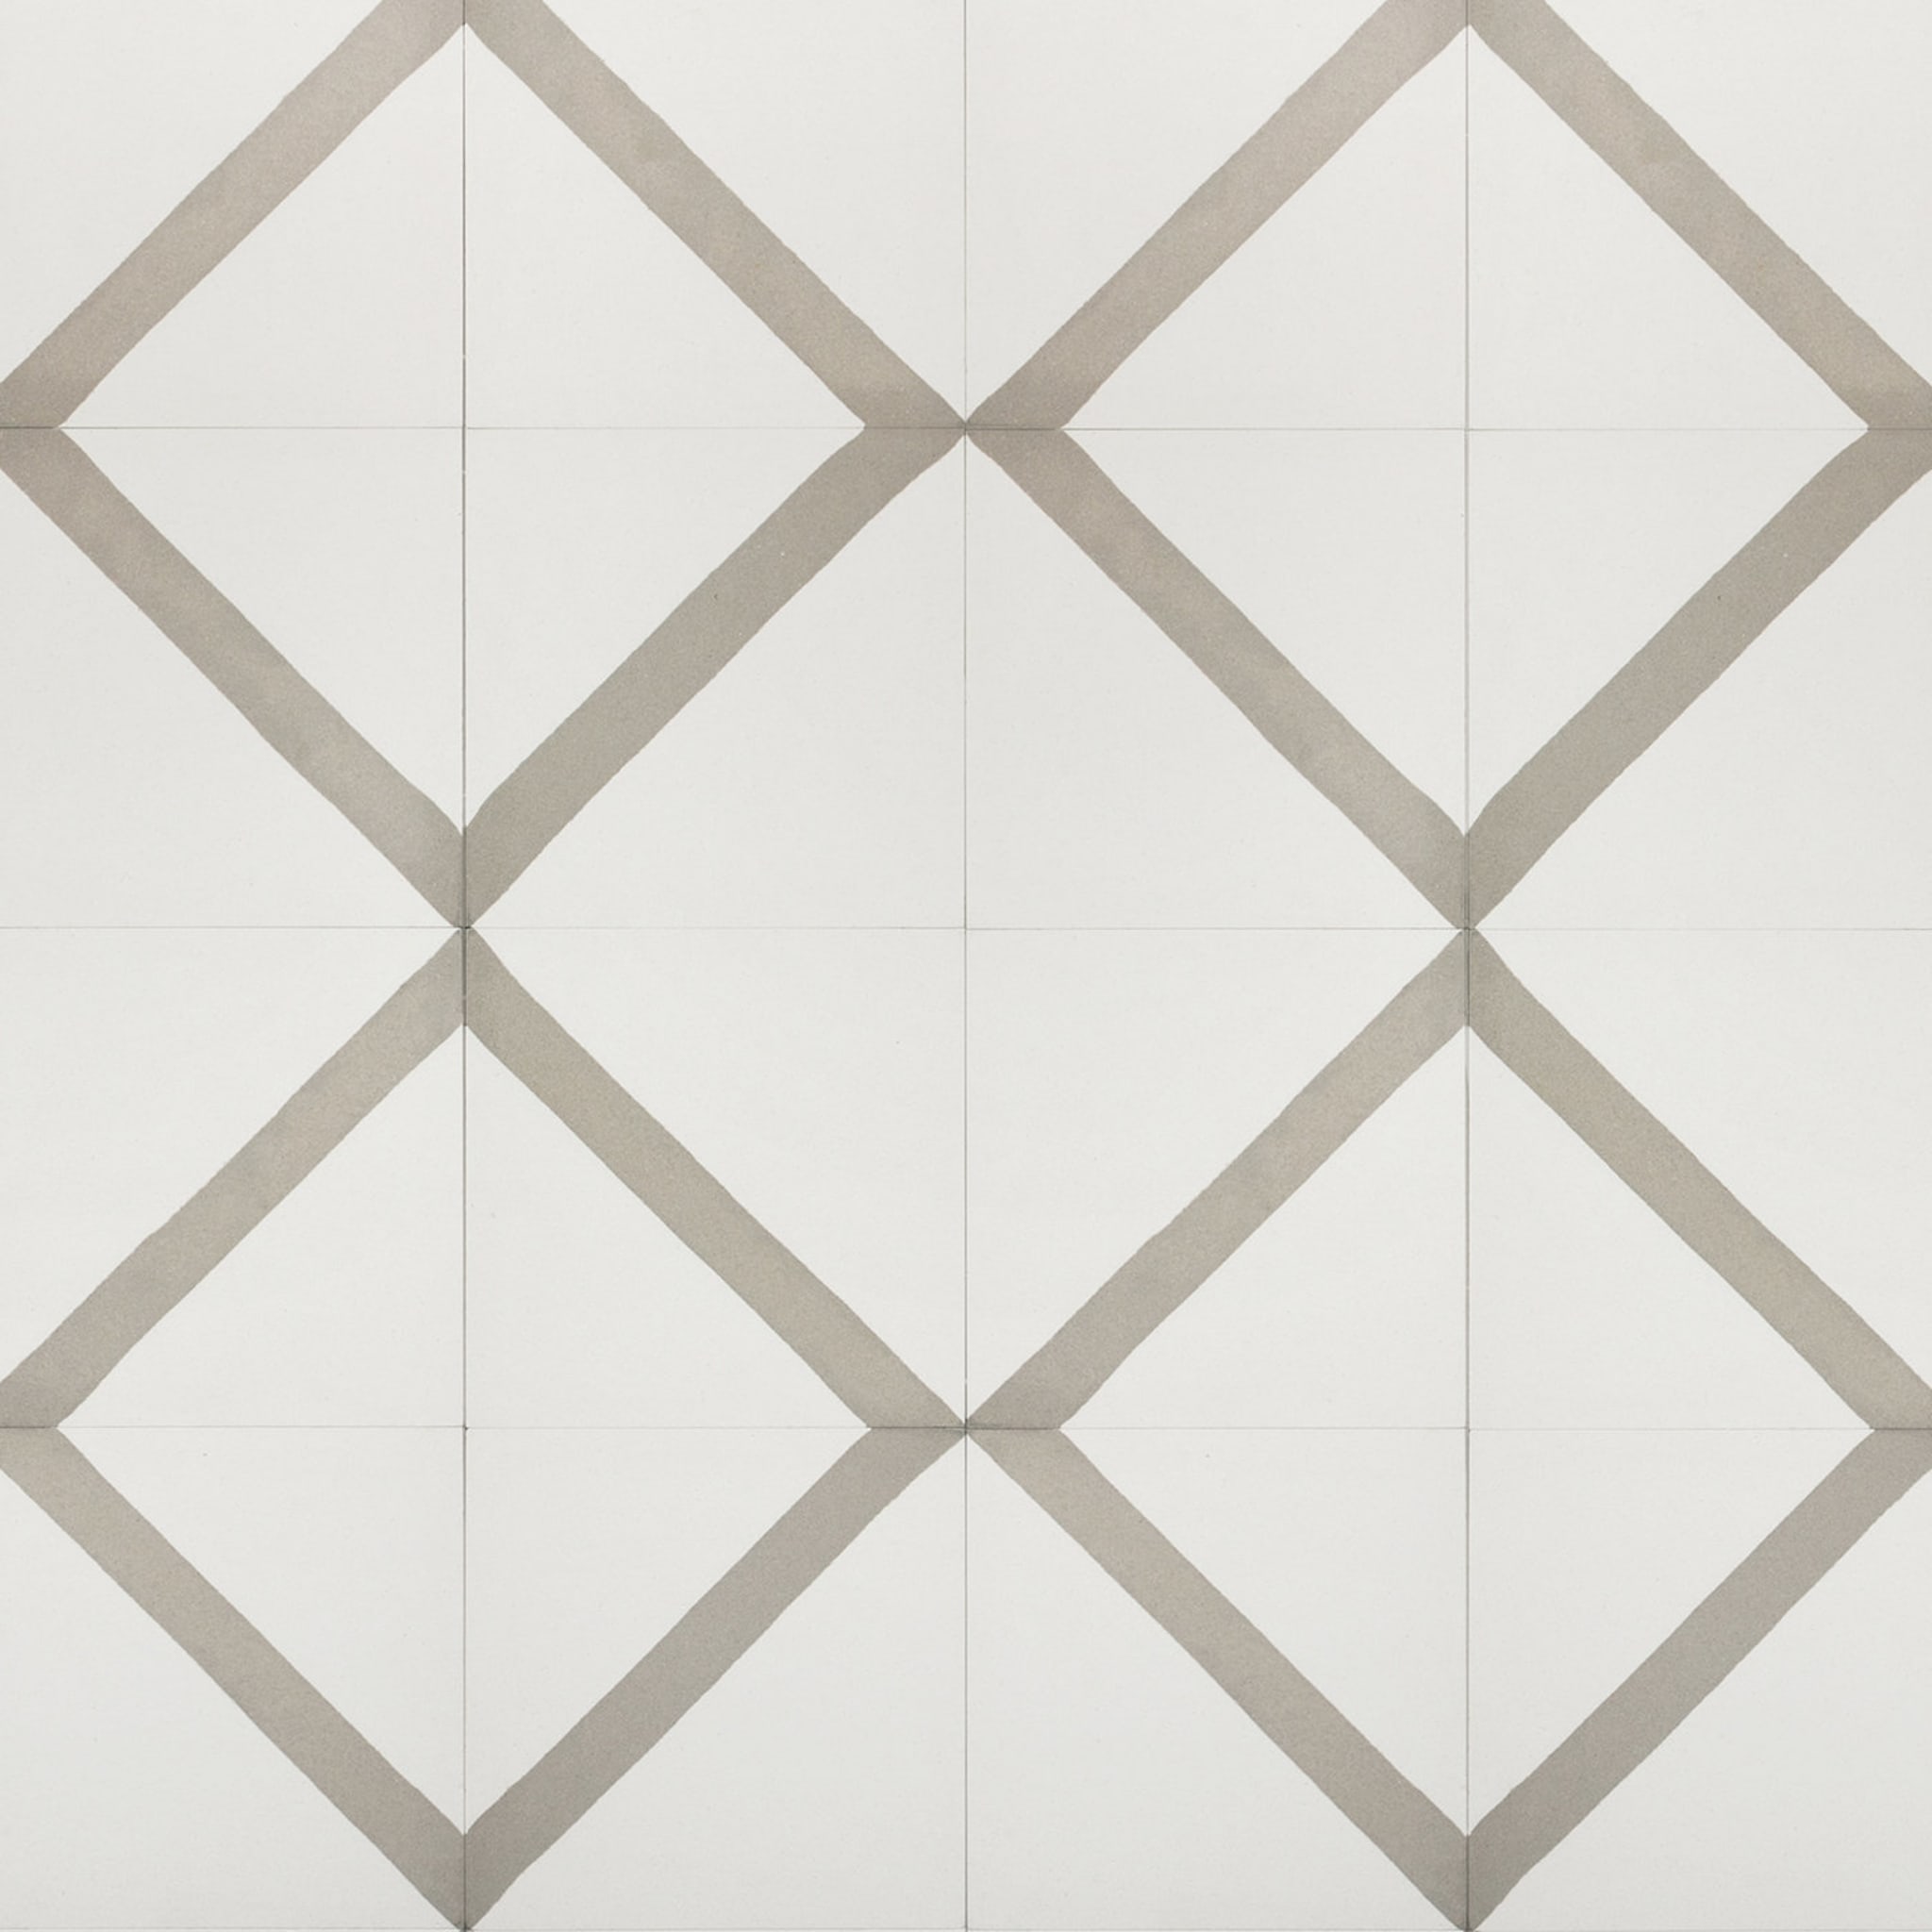 Omero Set of 25 Cement Tiles - Alternative view 1